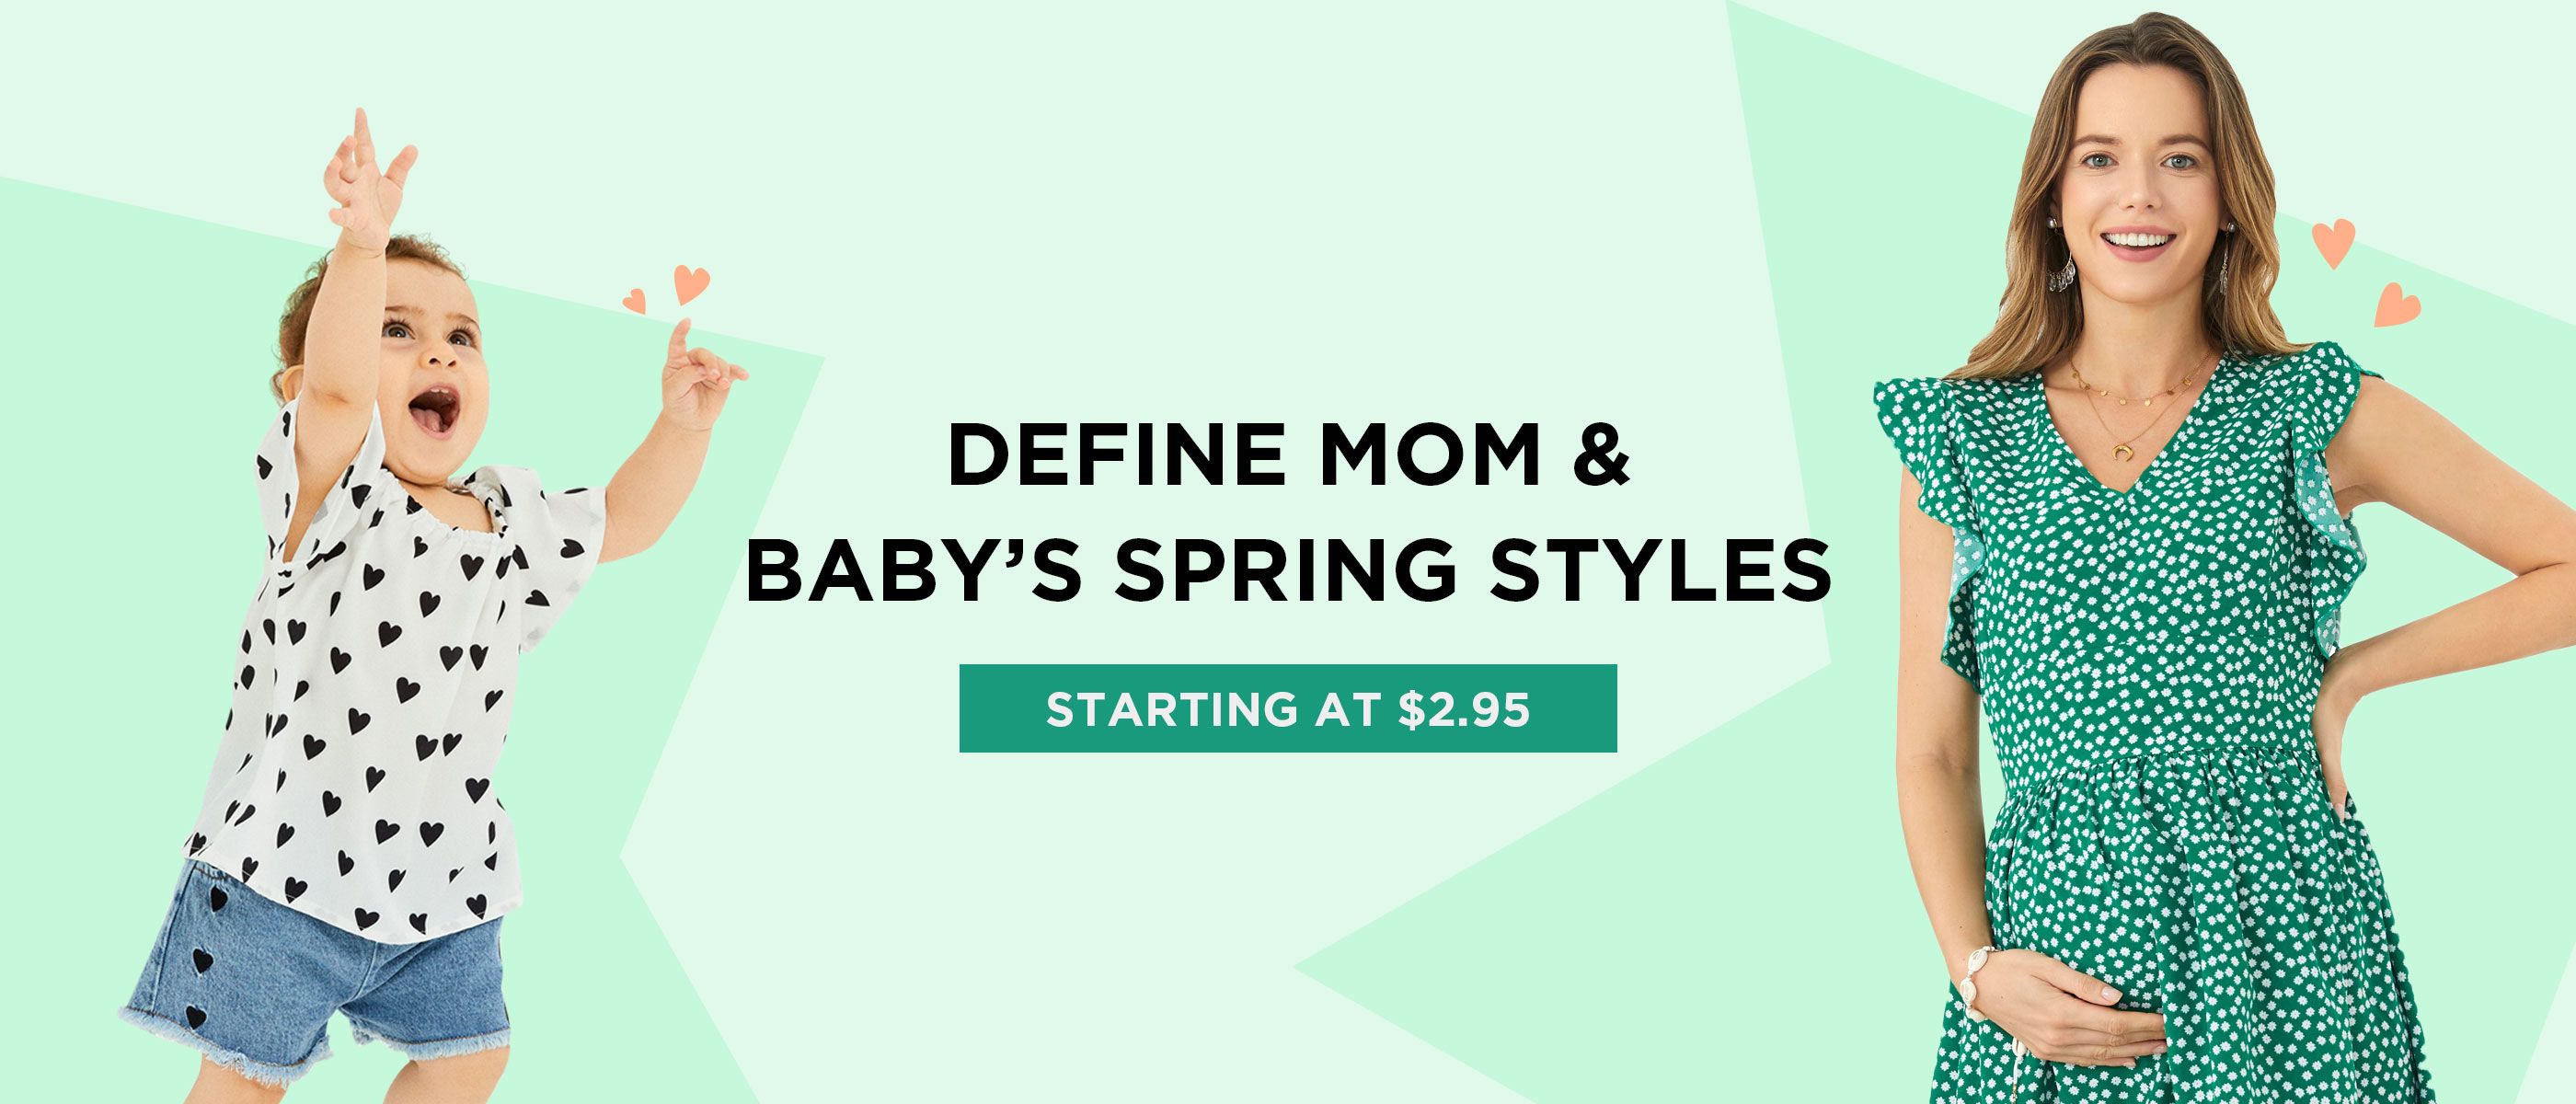 Define Mom & Baby’s Spring Styles